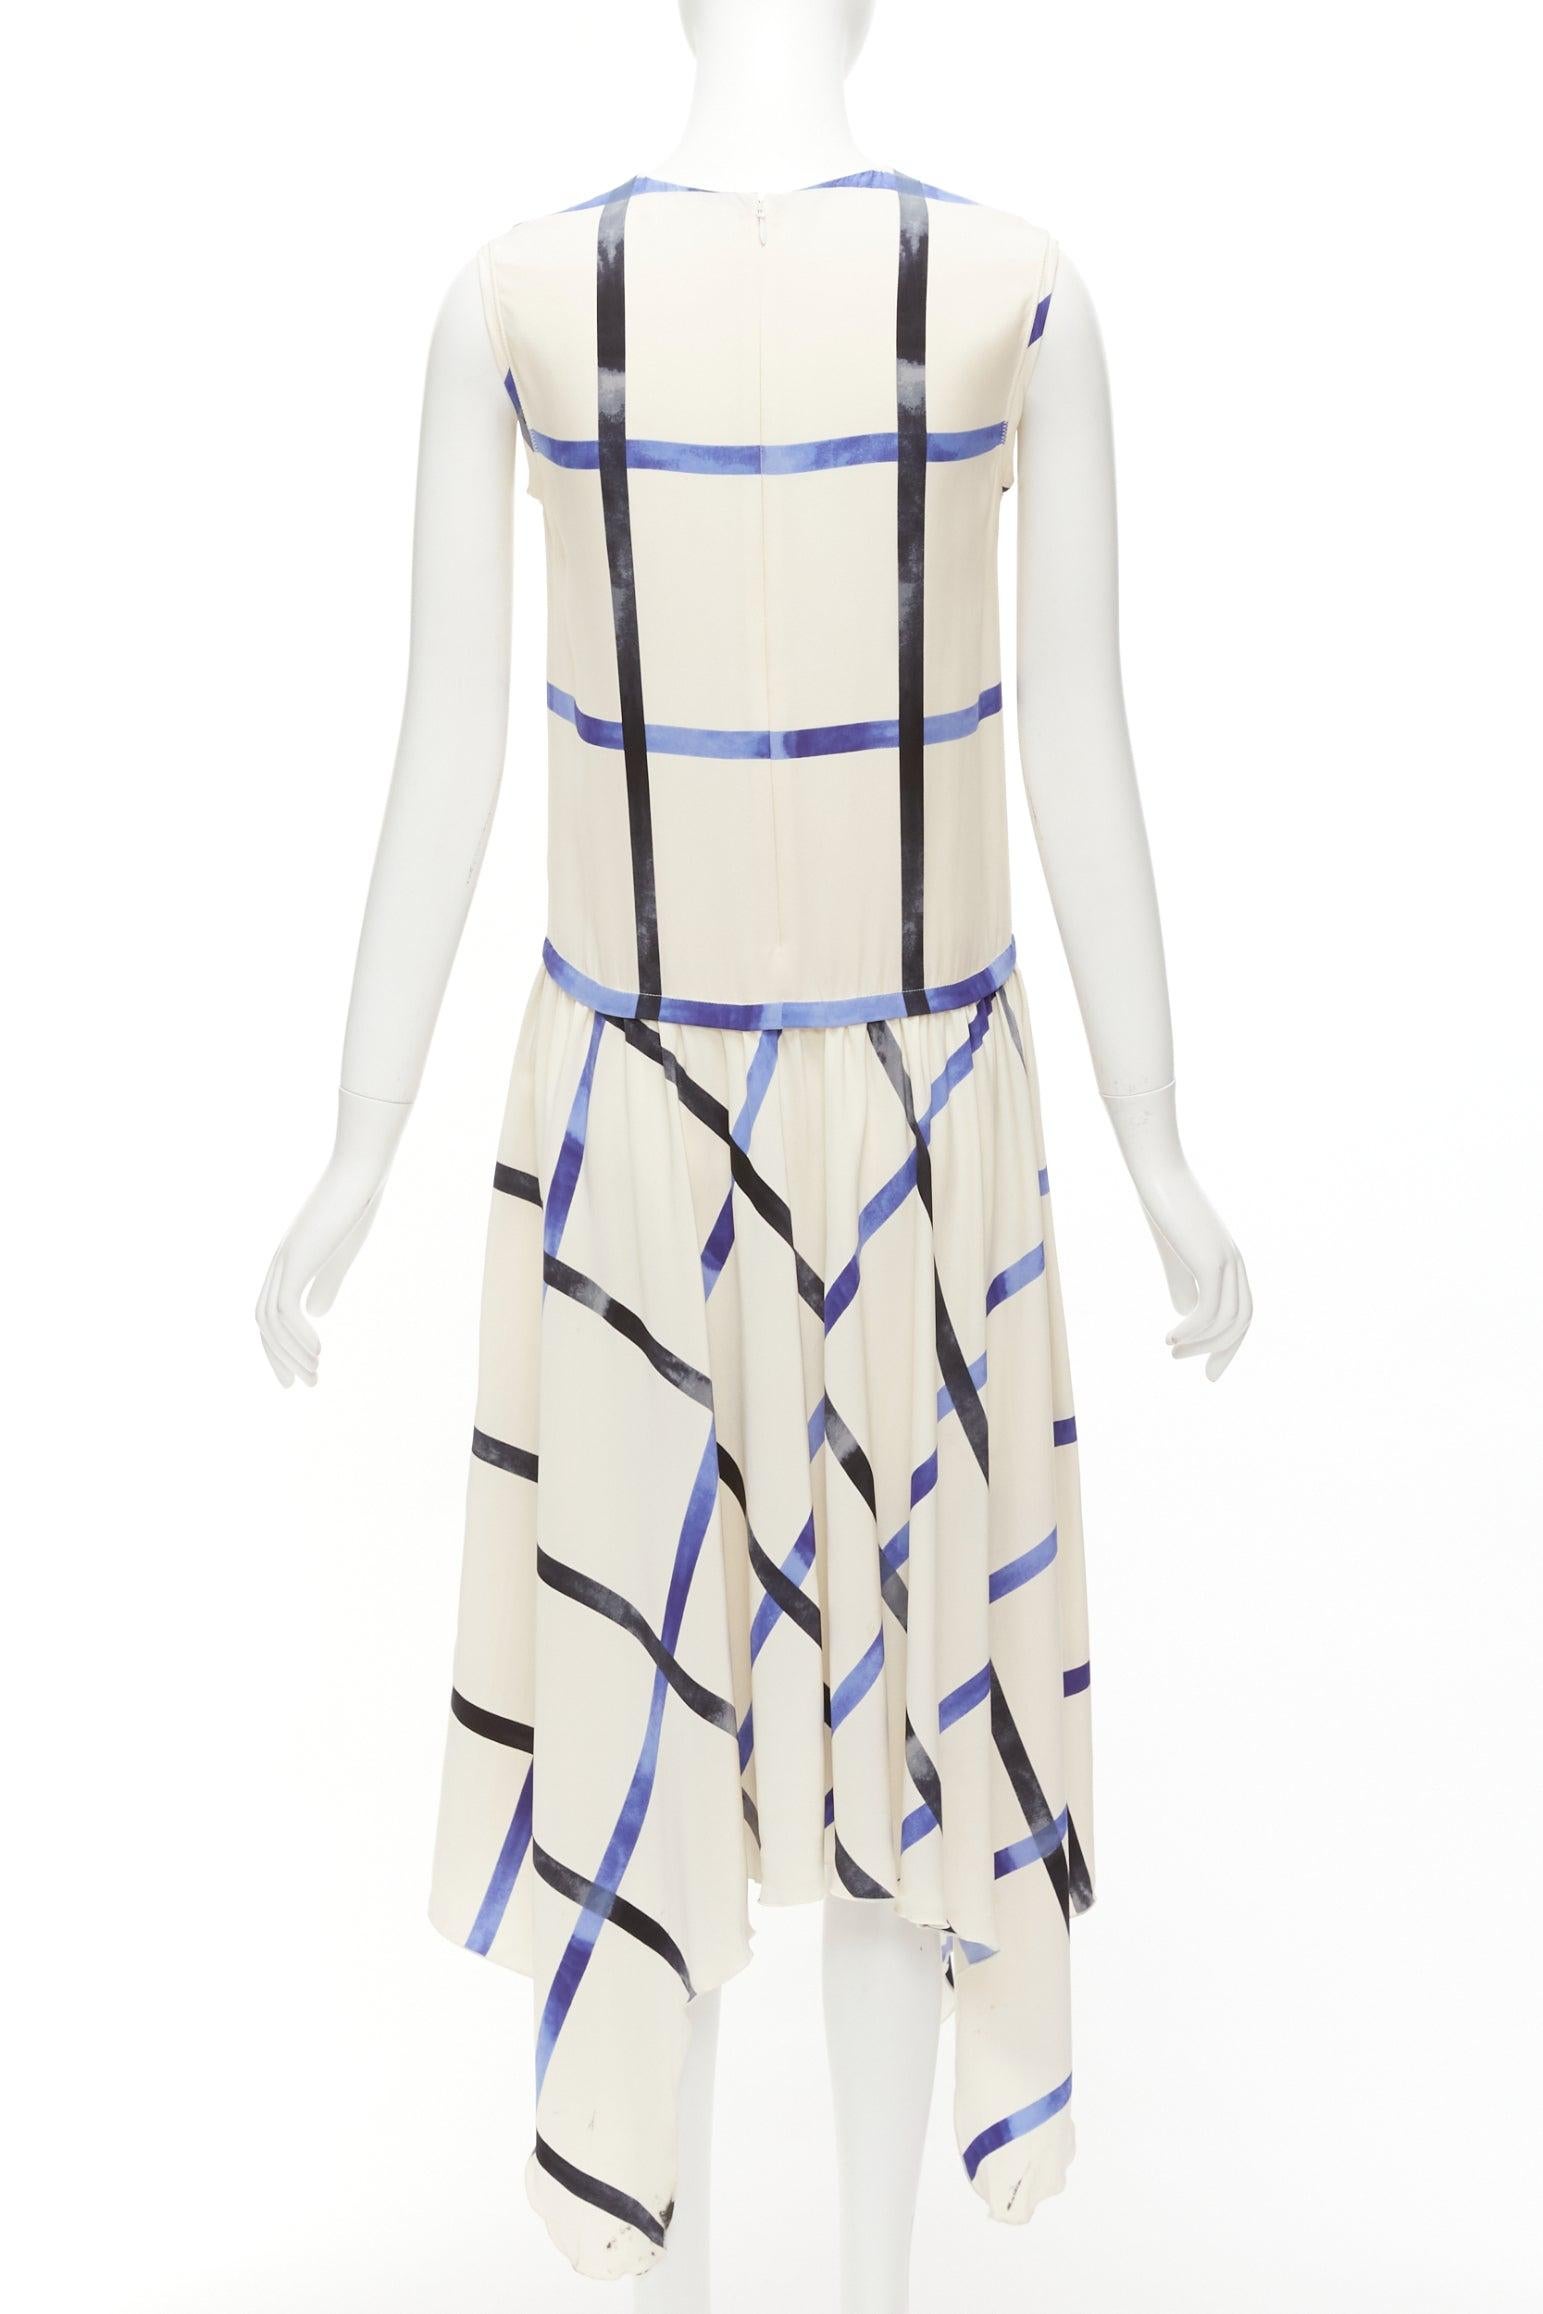 CELINE Phoebe Philo 2014 Runway cream blue 100% silk bias cut dress For Sale 1